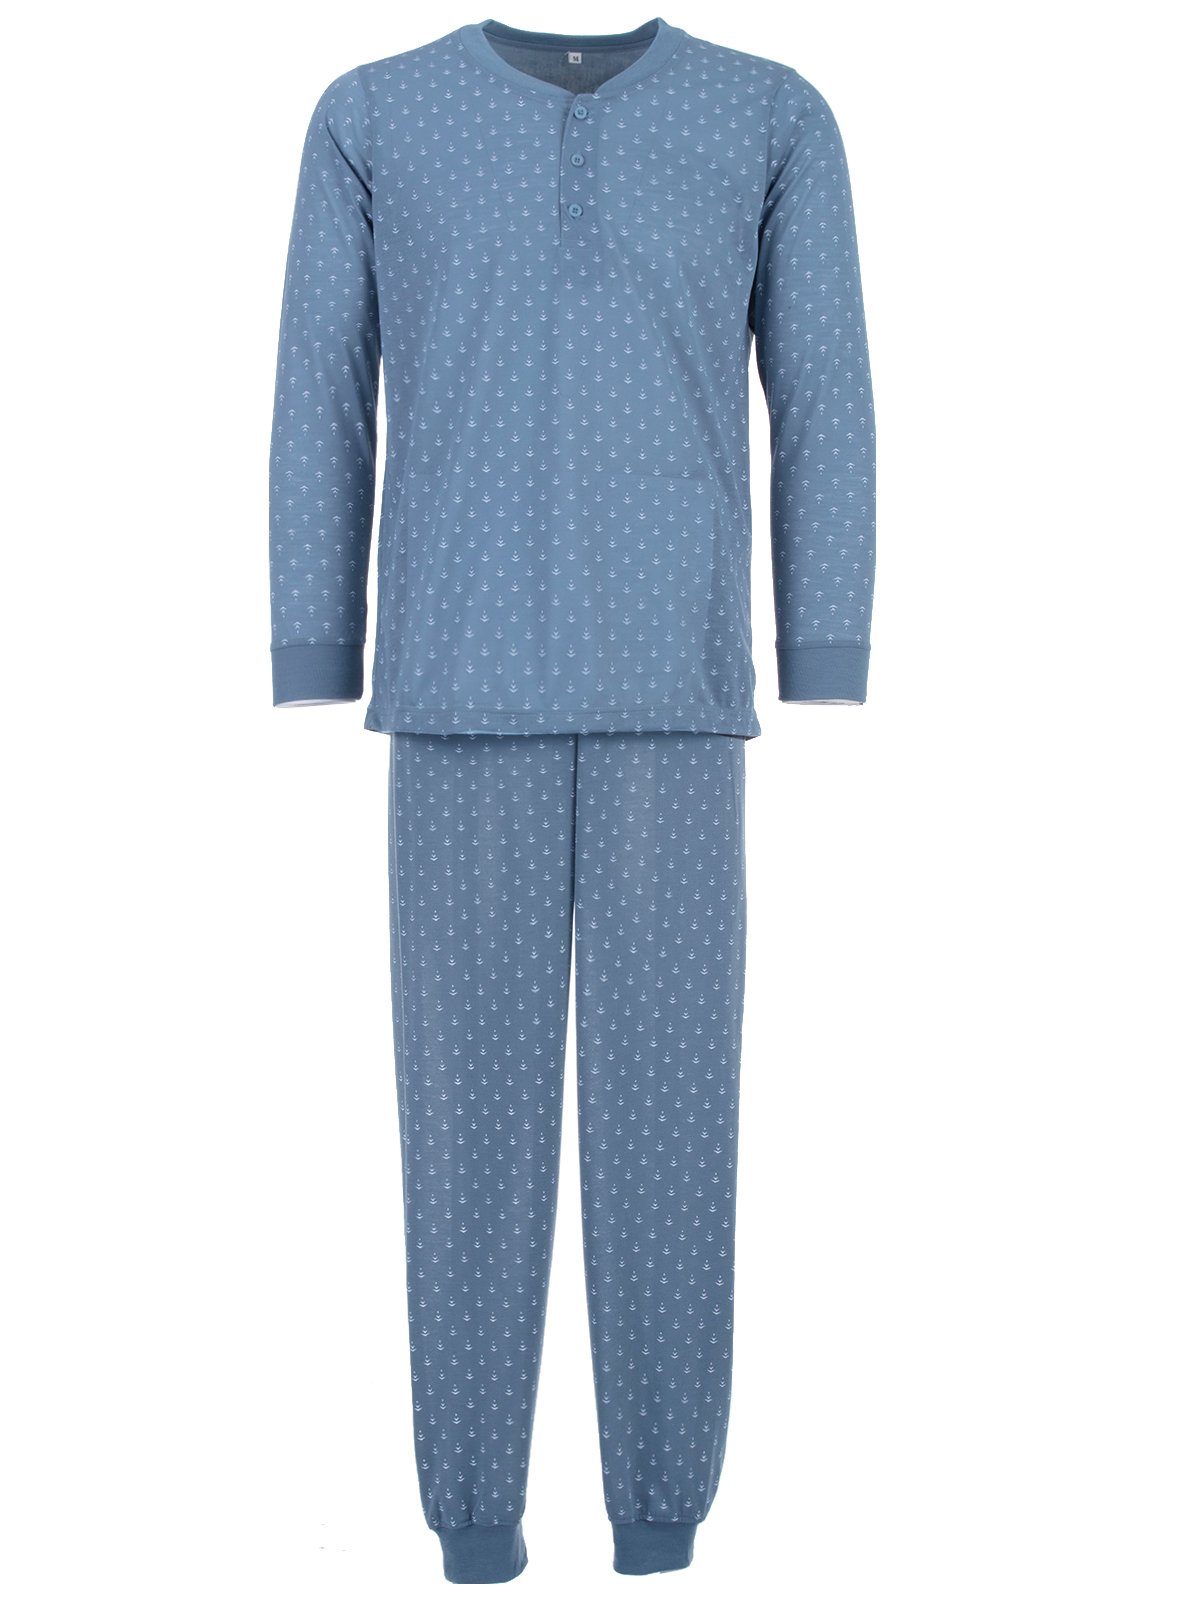 Lucky Schlafanzug Pyjama Set Langarm - Pfeil graublau